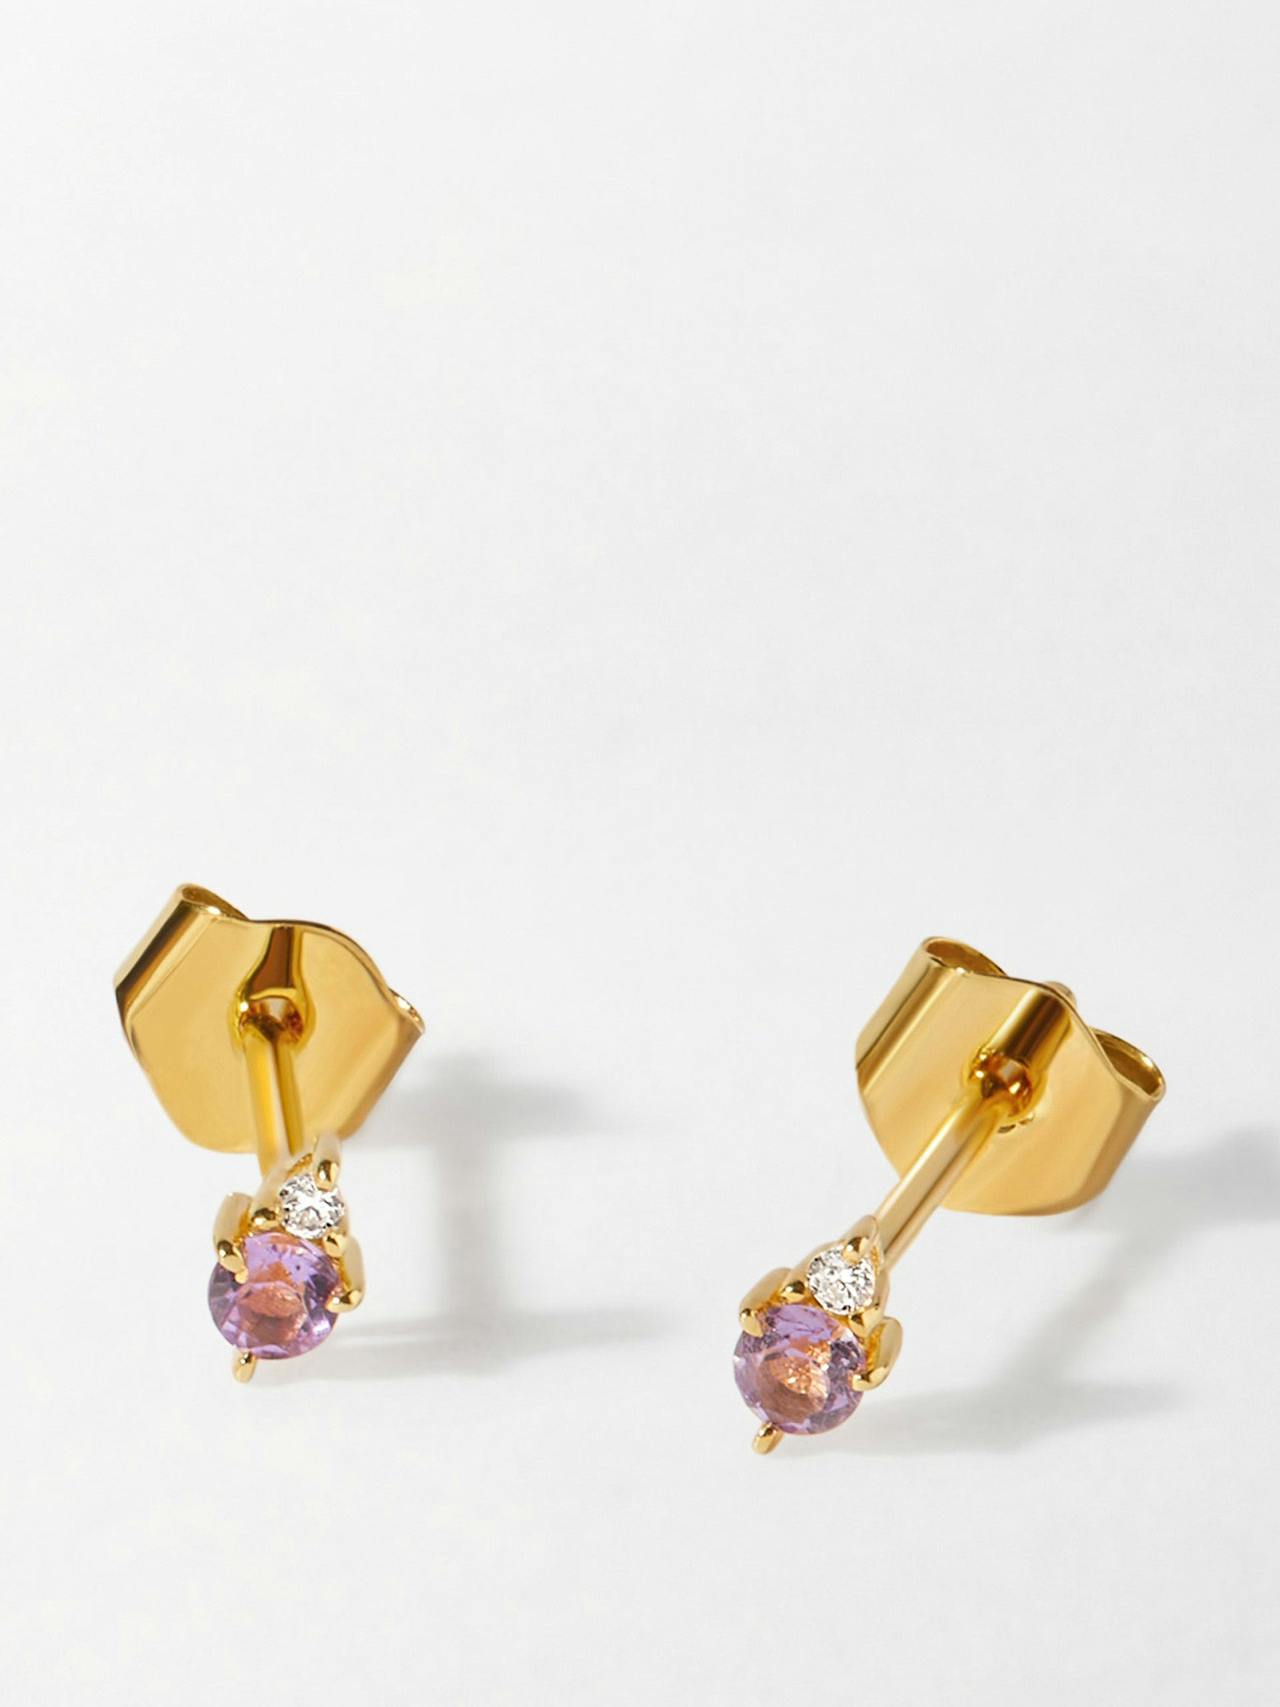 Amethyst diamond stud earrings